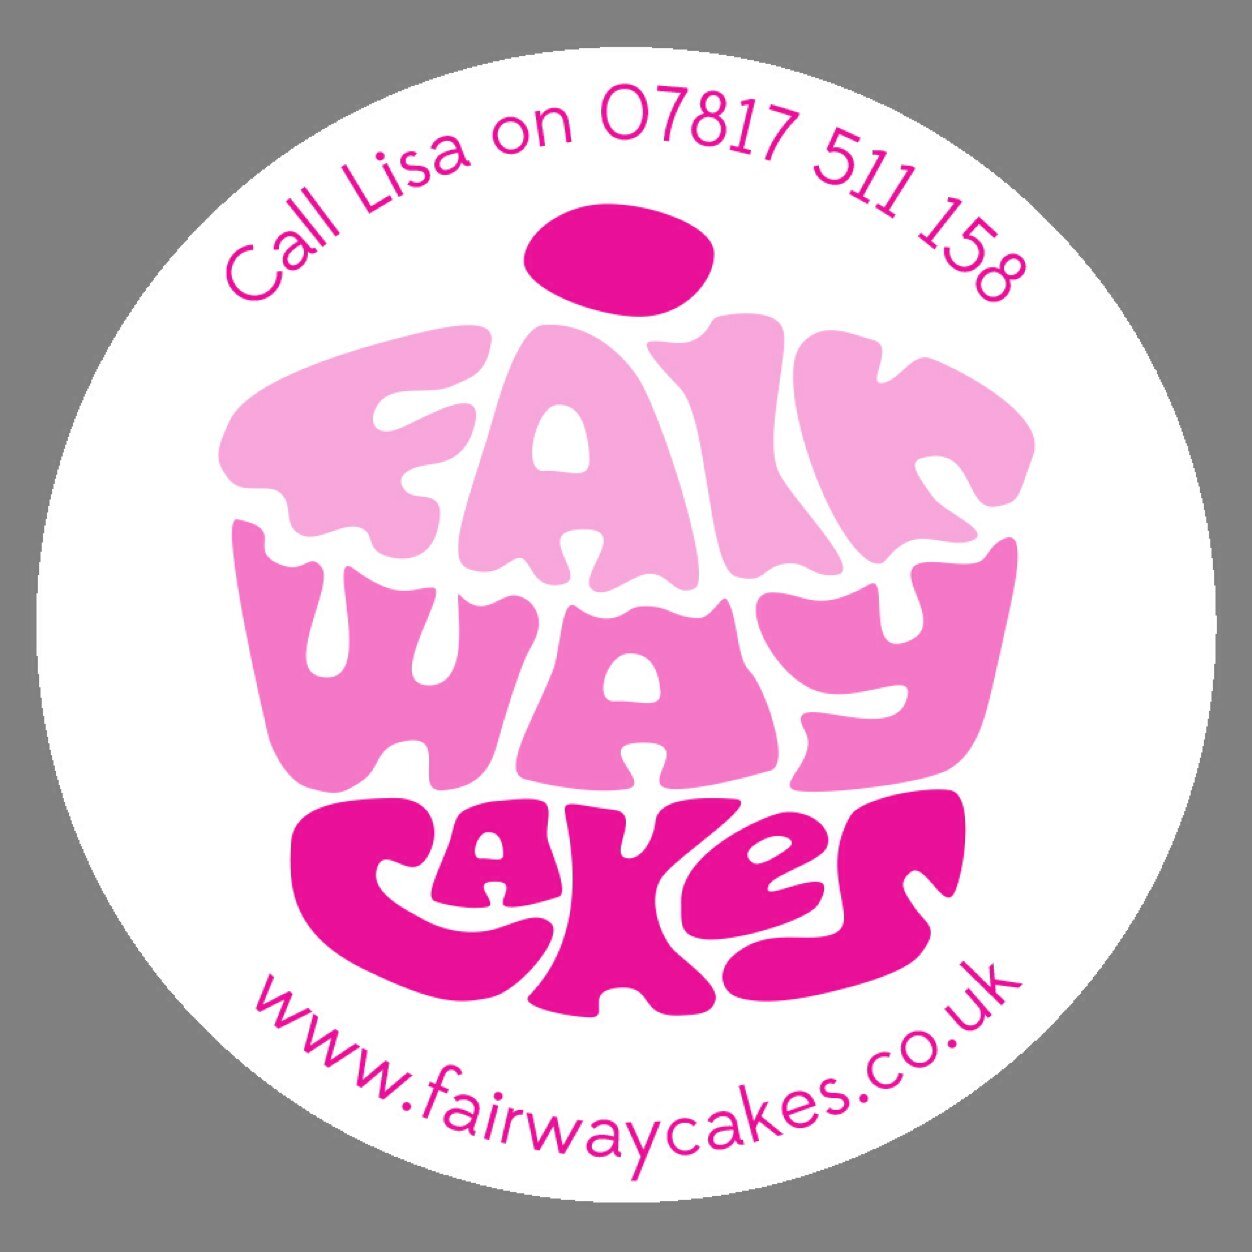 Fairway Cakes